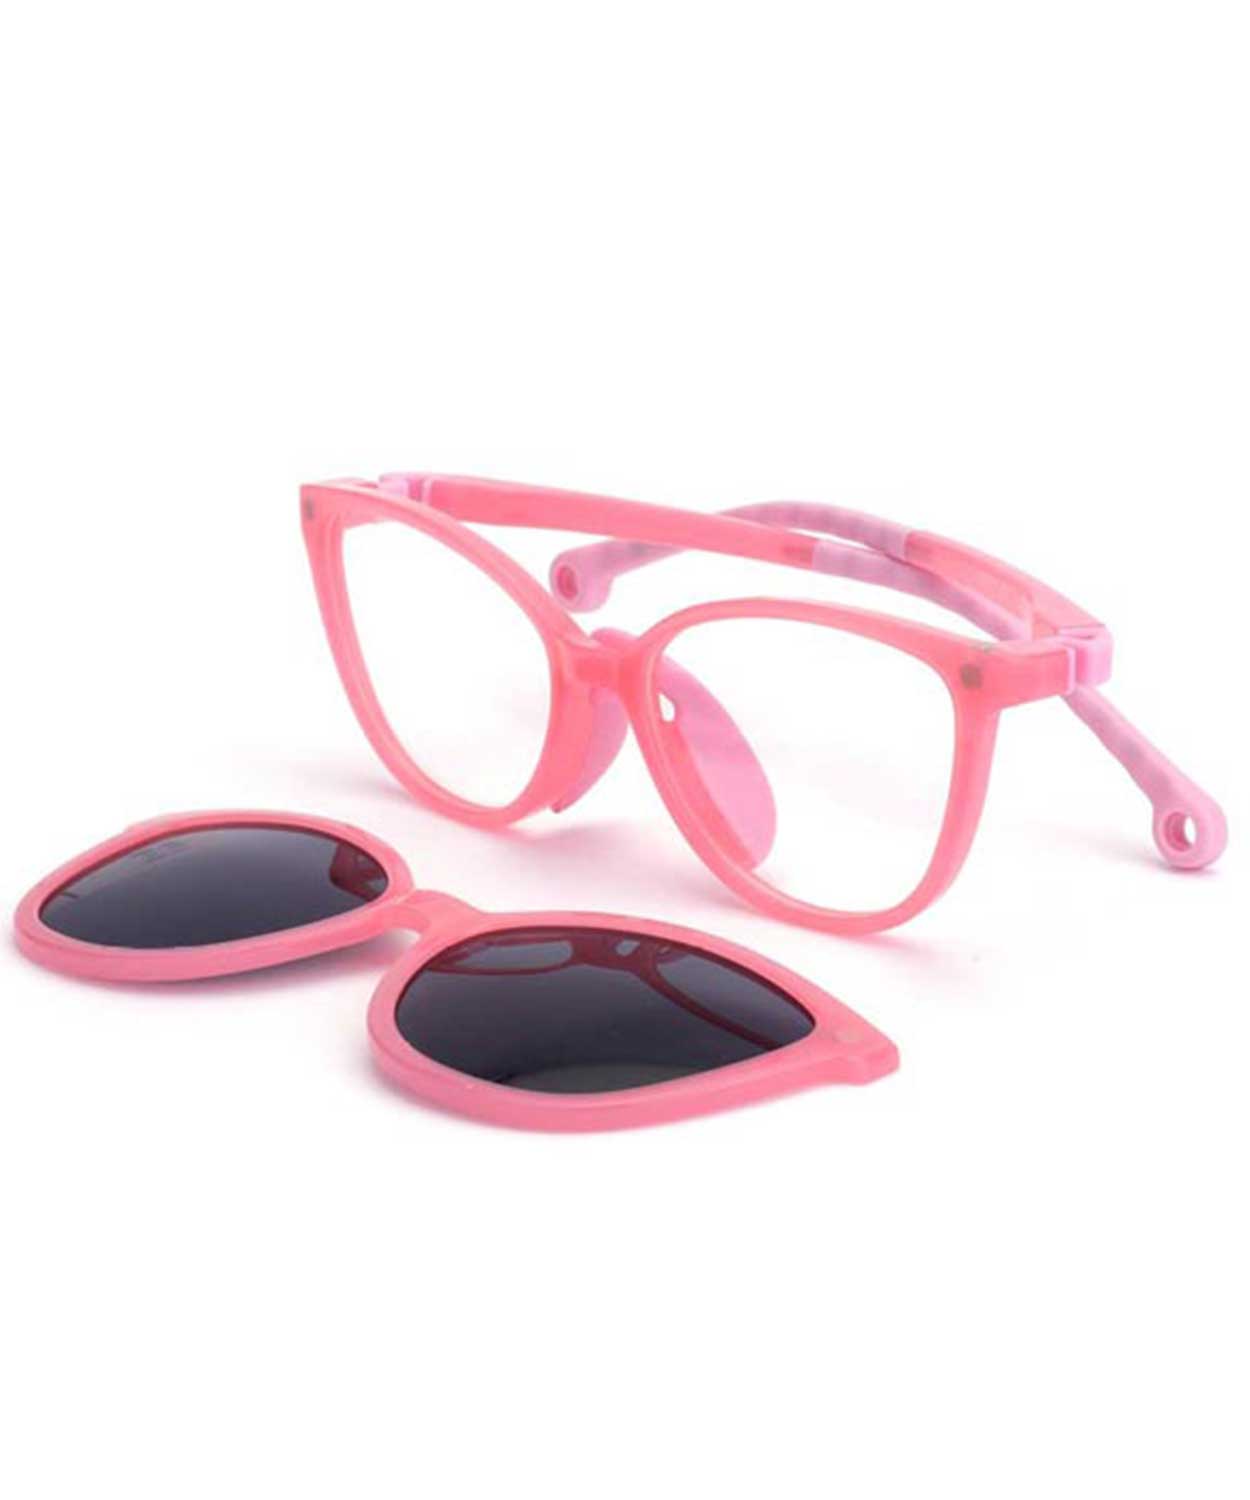 Clipons Sunglasses 19977